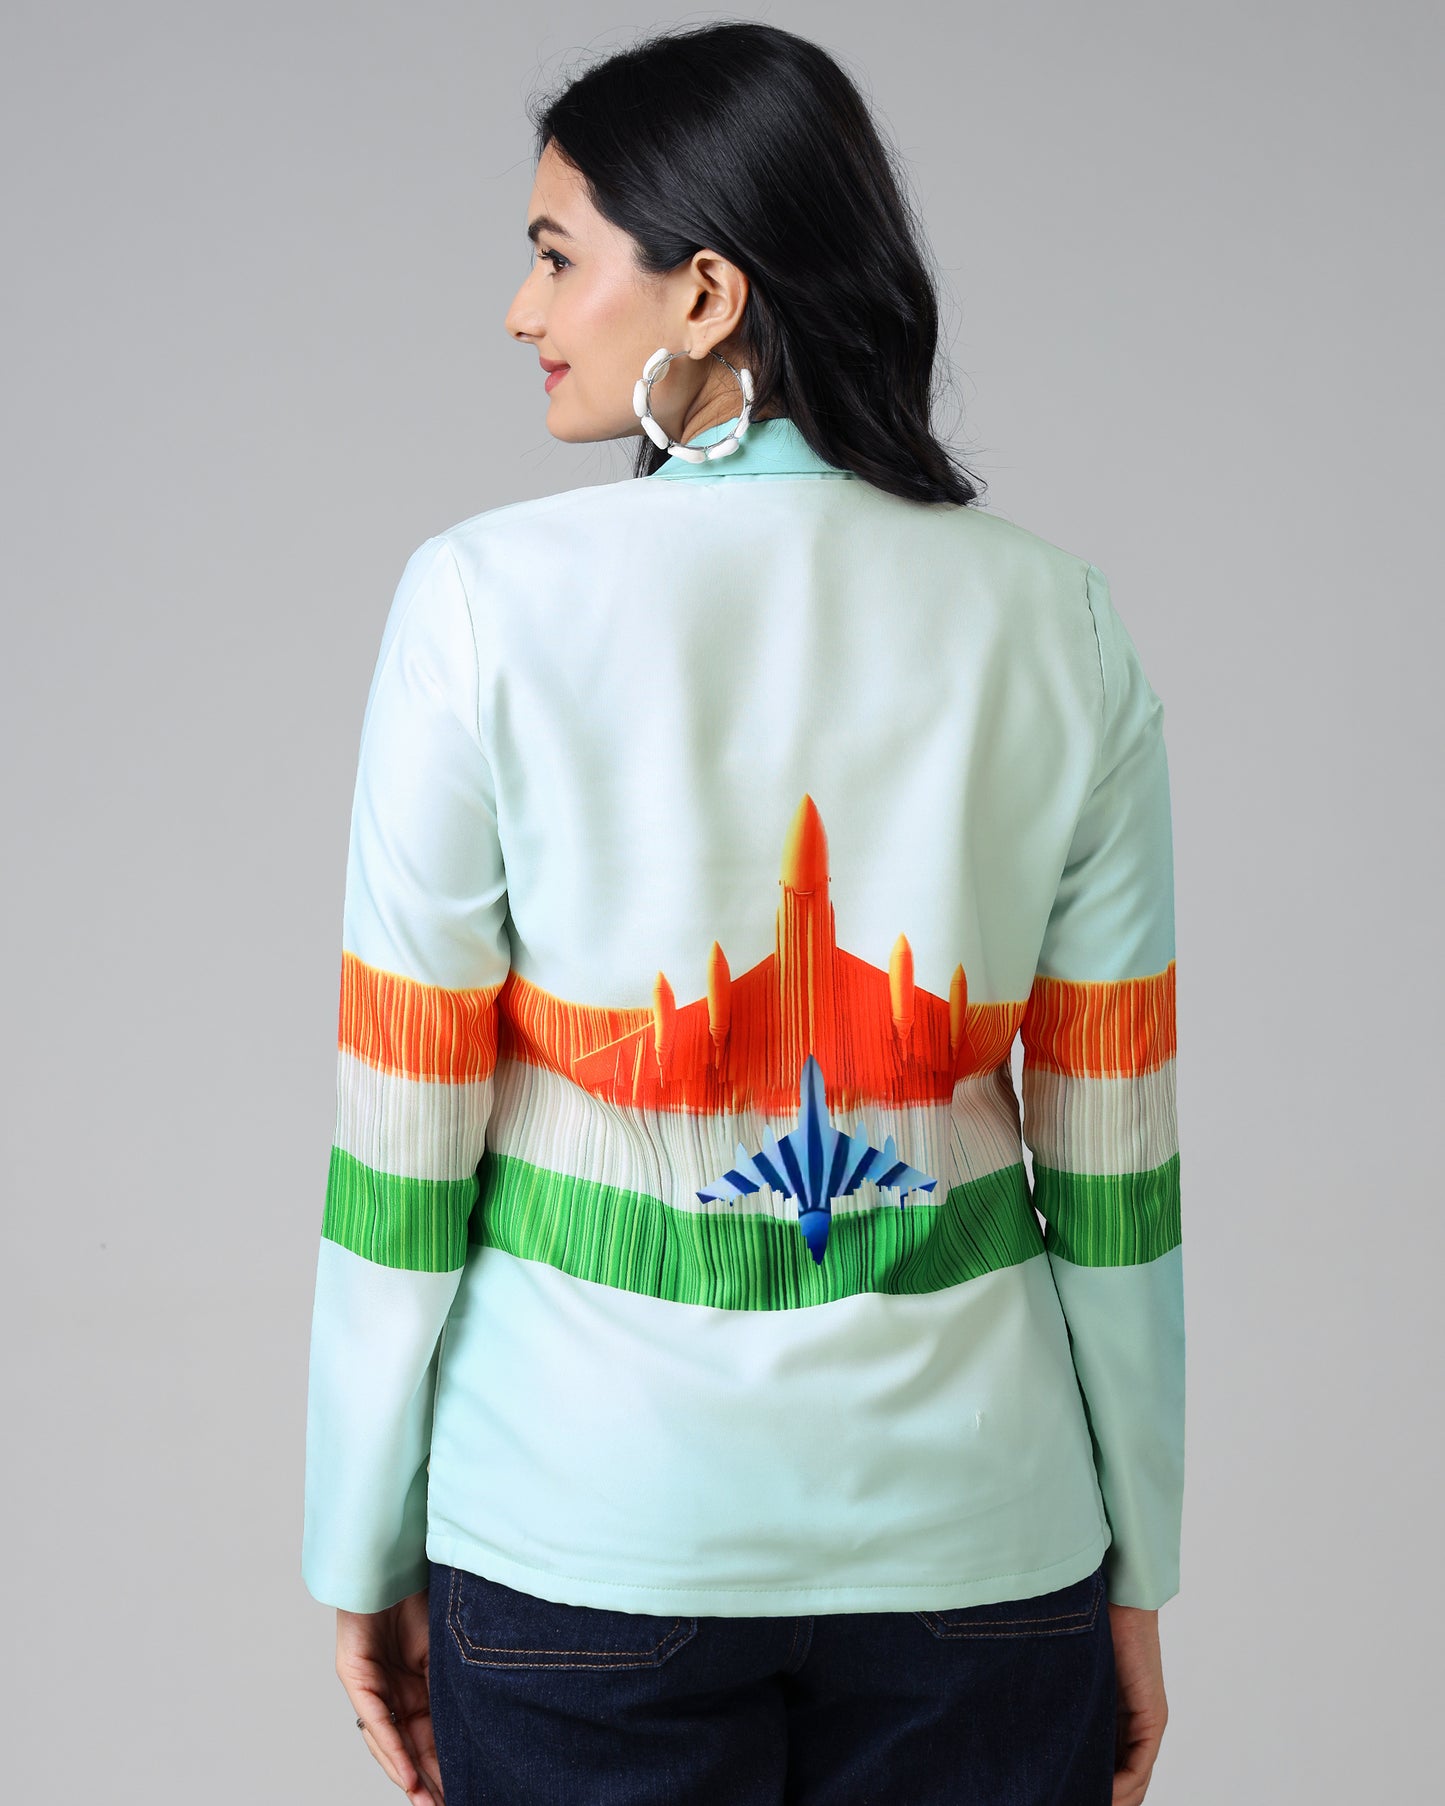 Salute Your Nation: Women's Patriotic Jacket